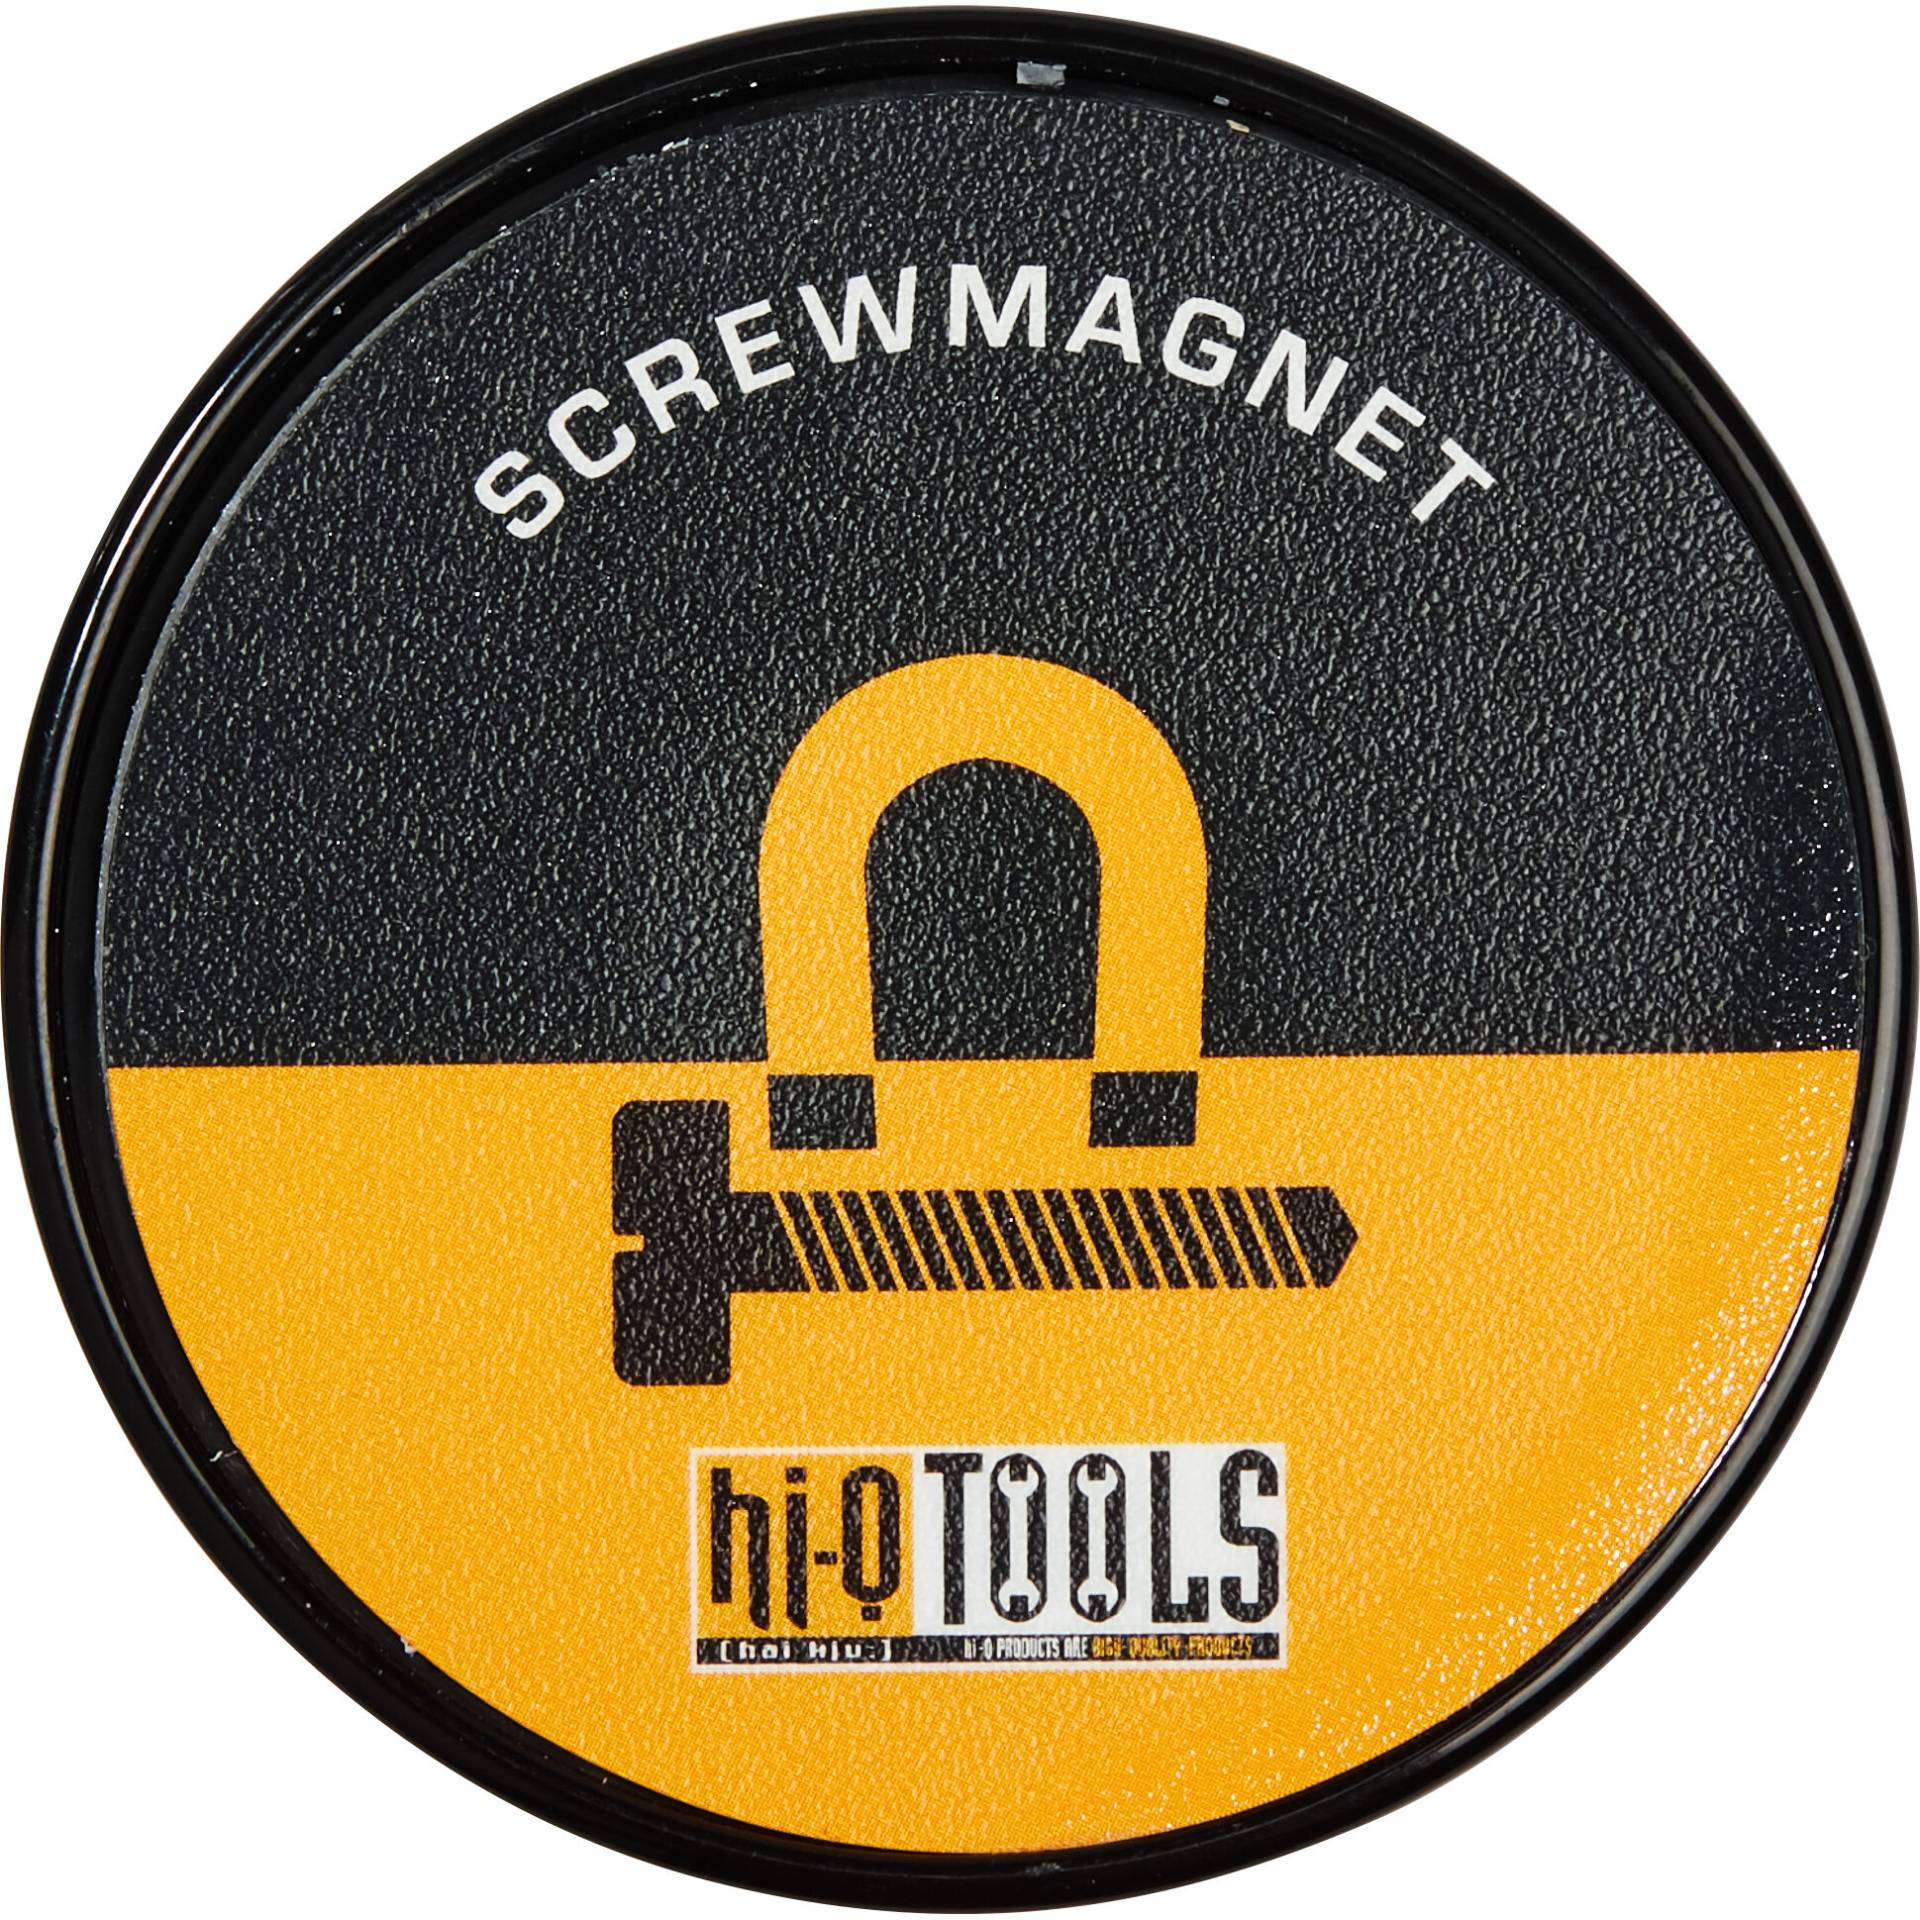 Hi-Q Tools Screwmagnet Ø 67mm mit Hosenclip von Hi-Q Tools